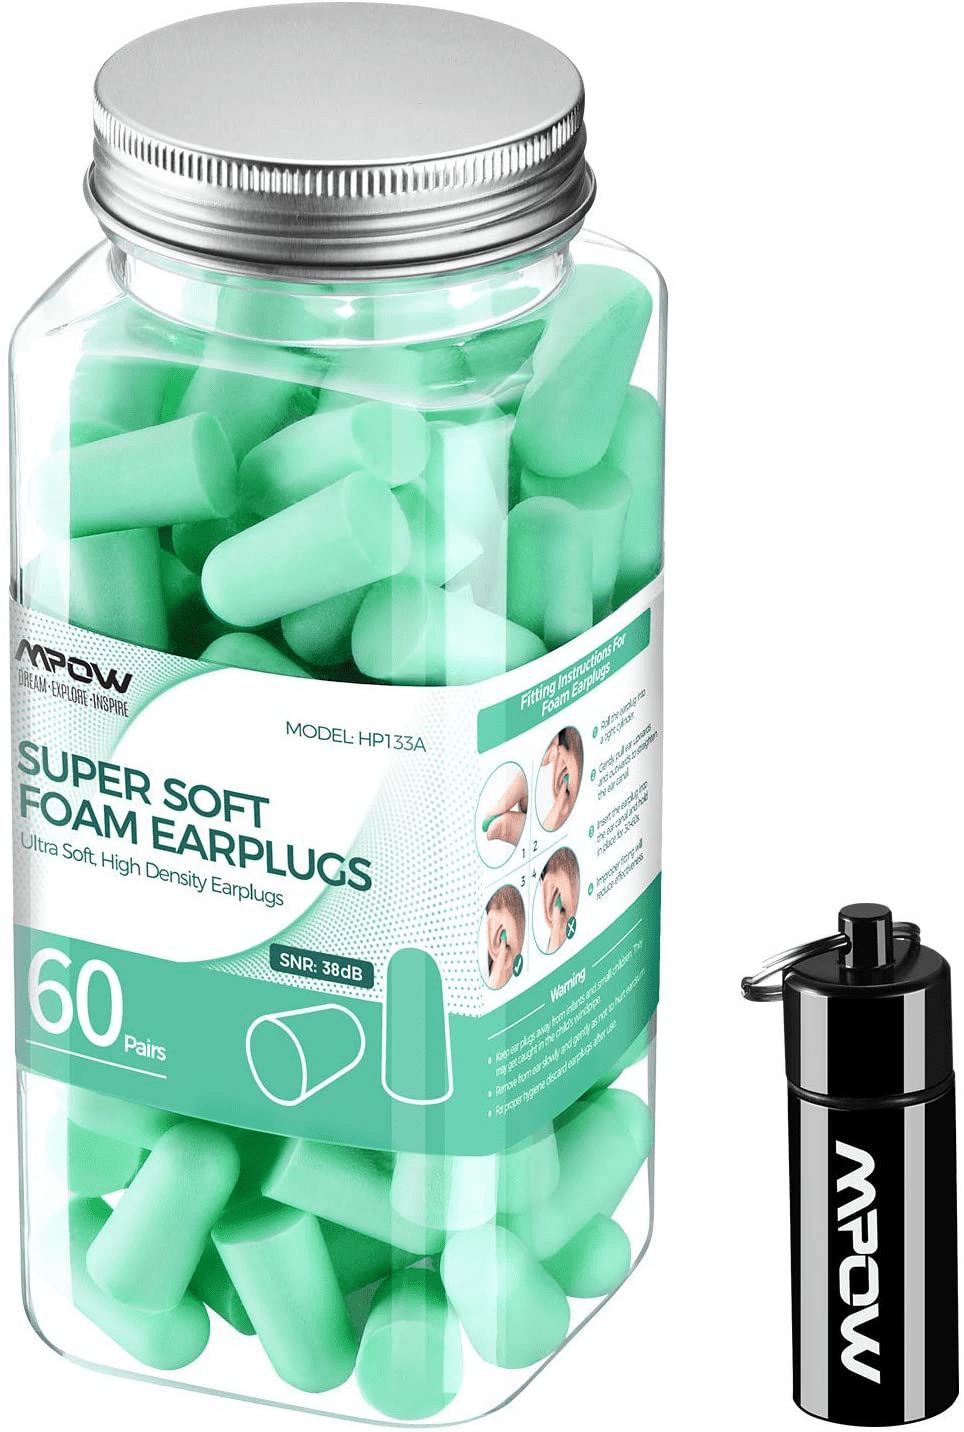 Mpow 055 Ear Plugs 60 Pairs EarPlugs with Aluminum 34dB SNR Soft foam EarPlugs 